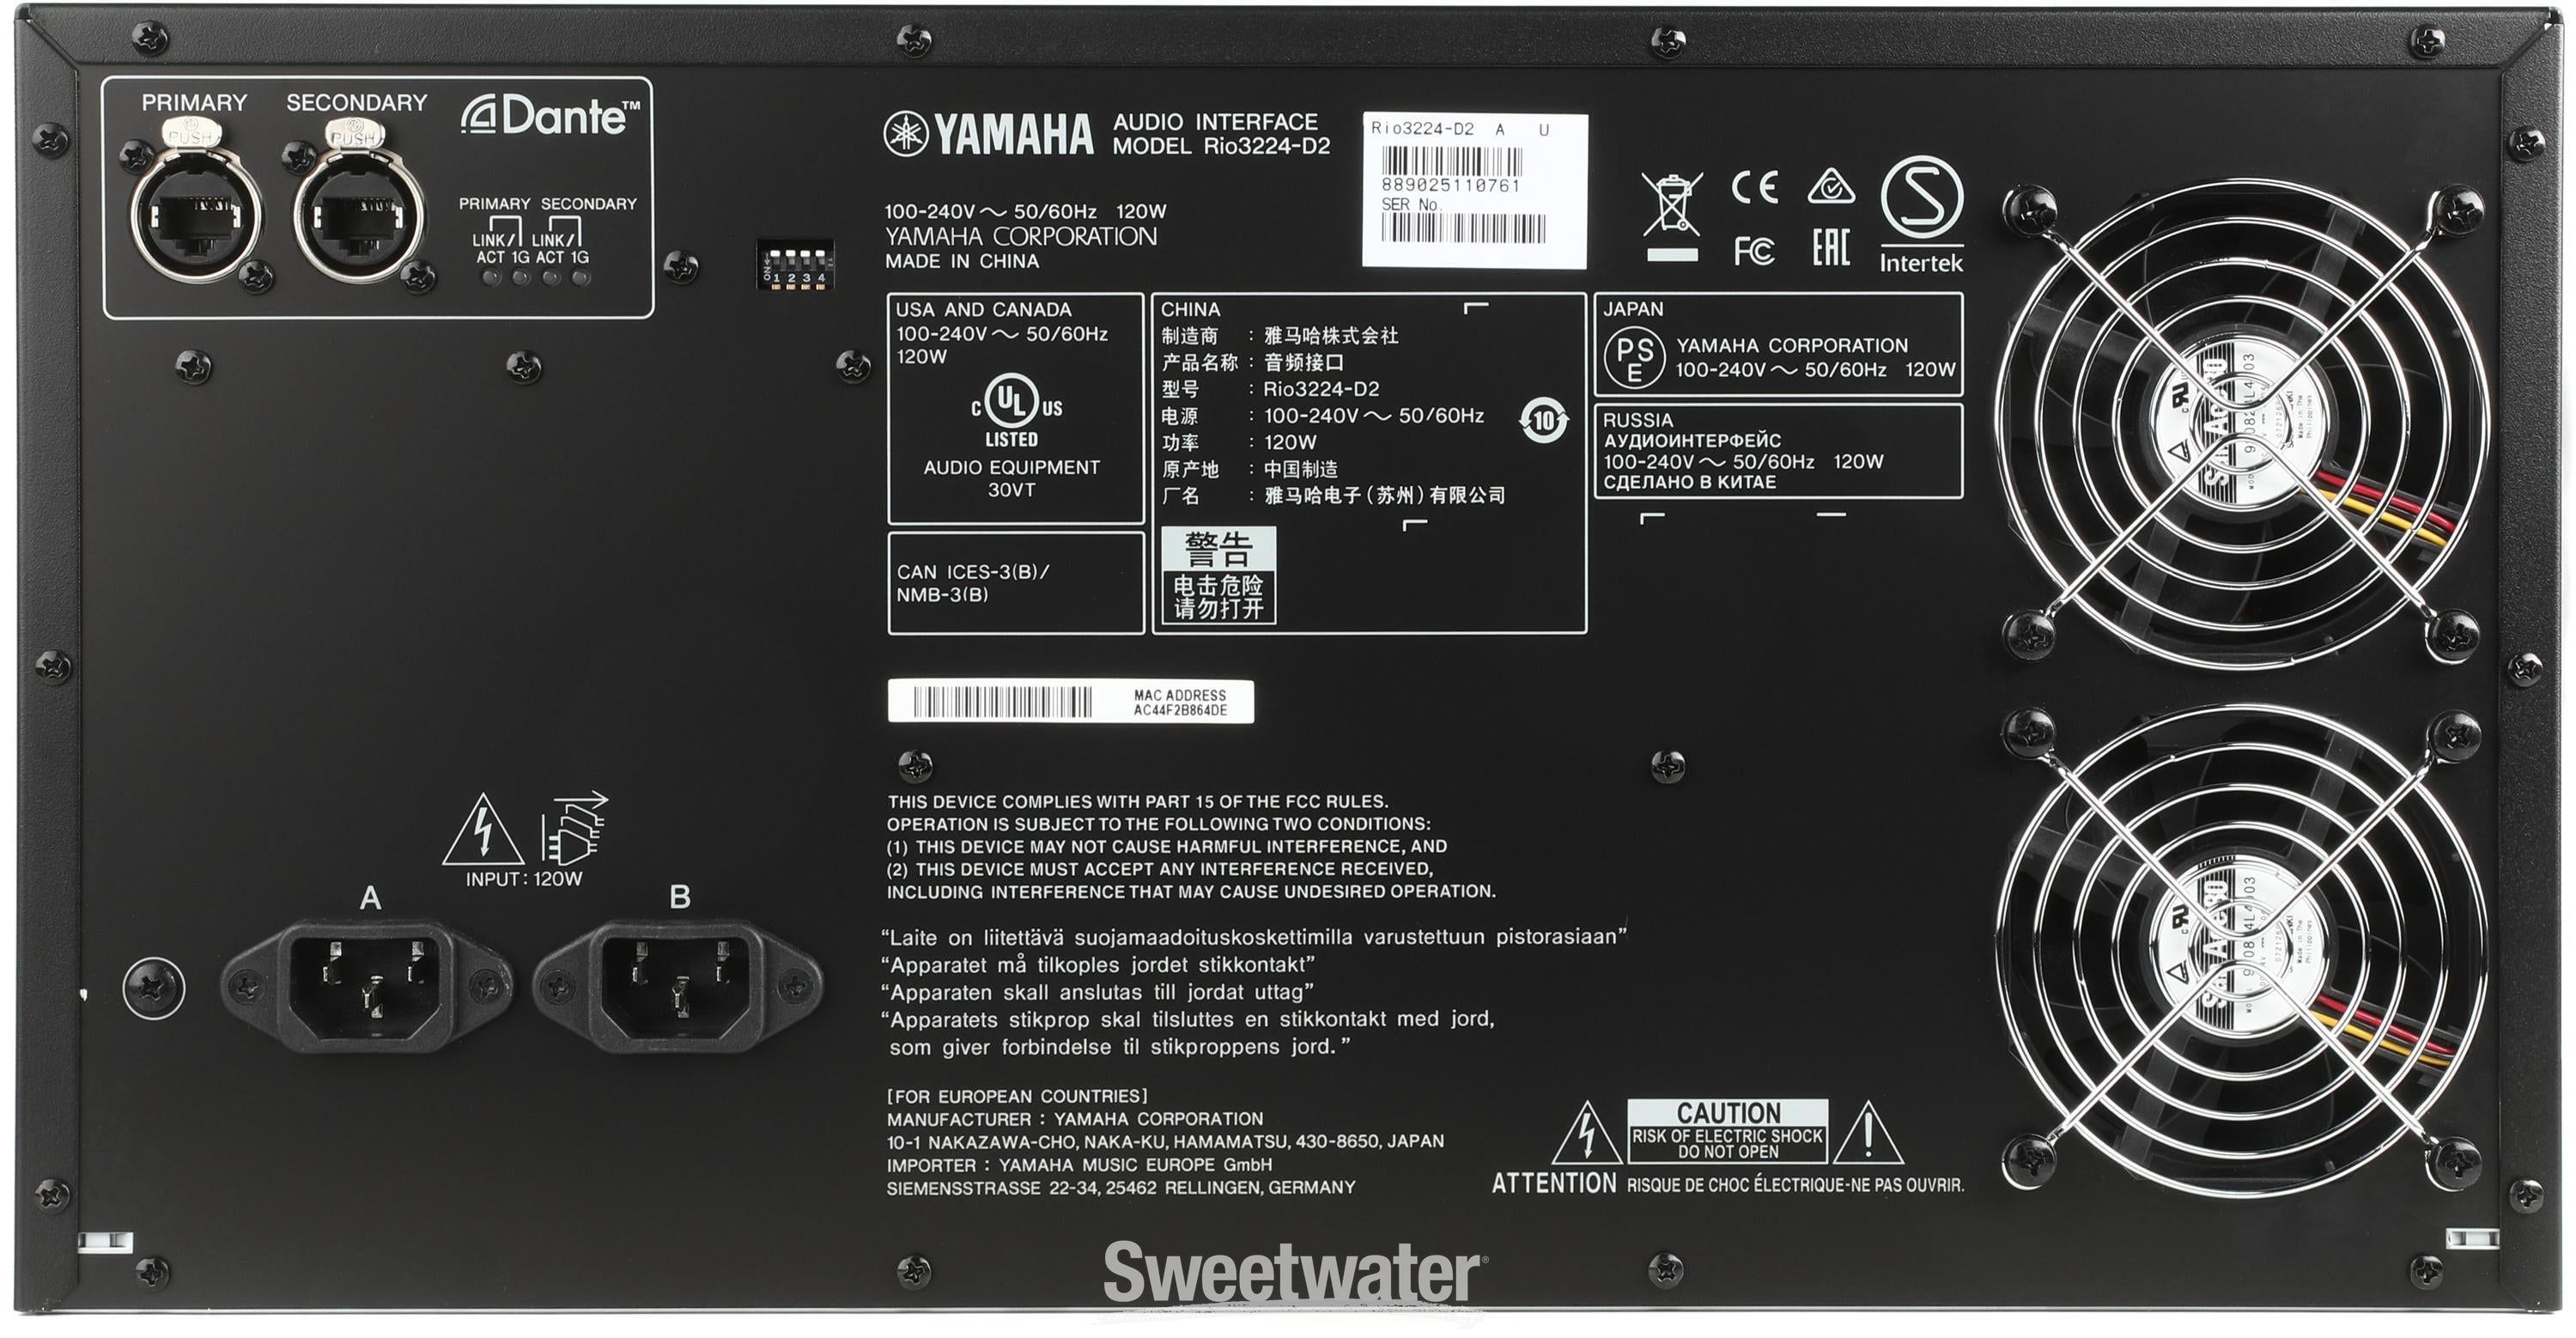 Yamaha Rio3224-D2 32-input / 24-output Dante Stage Box